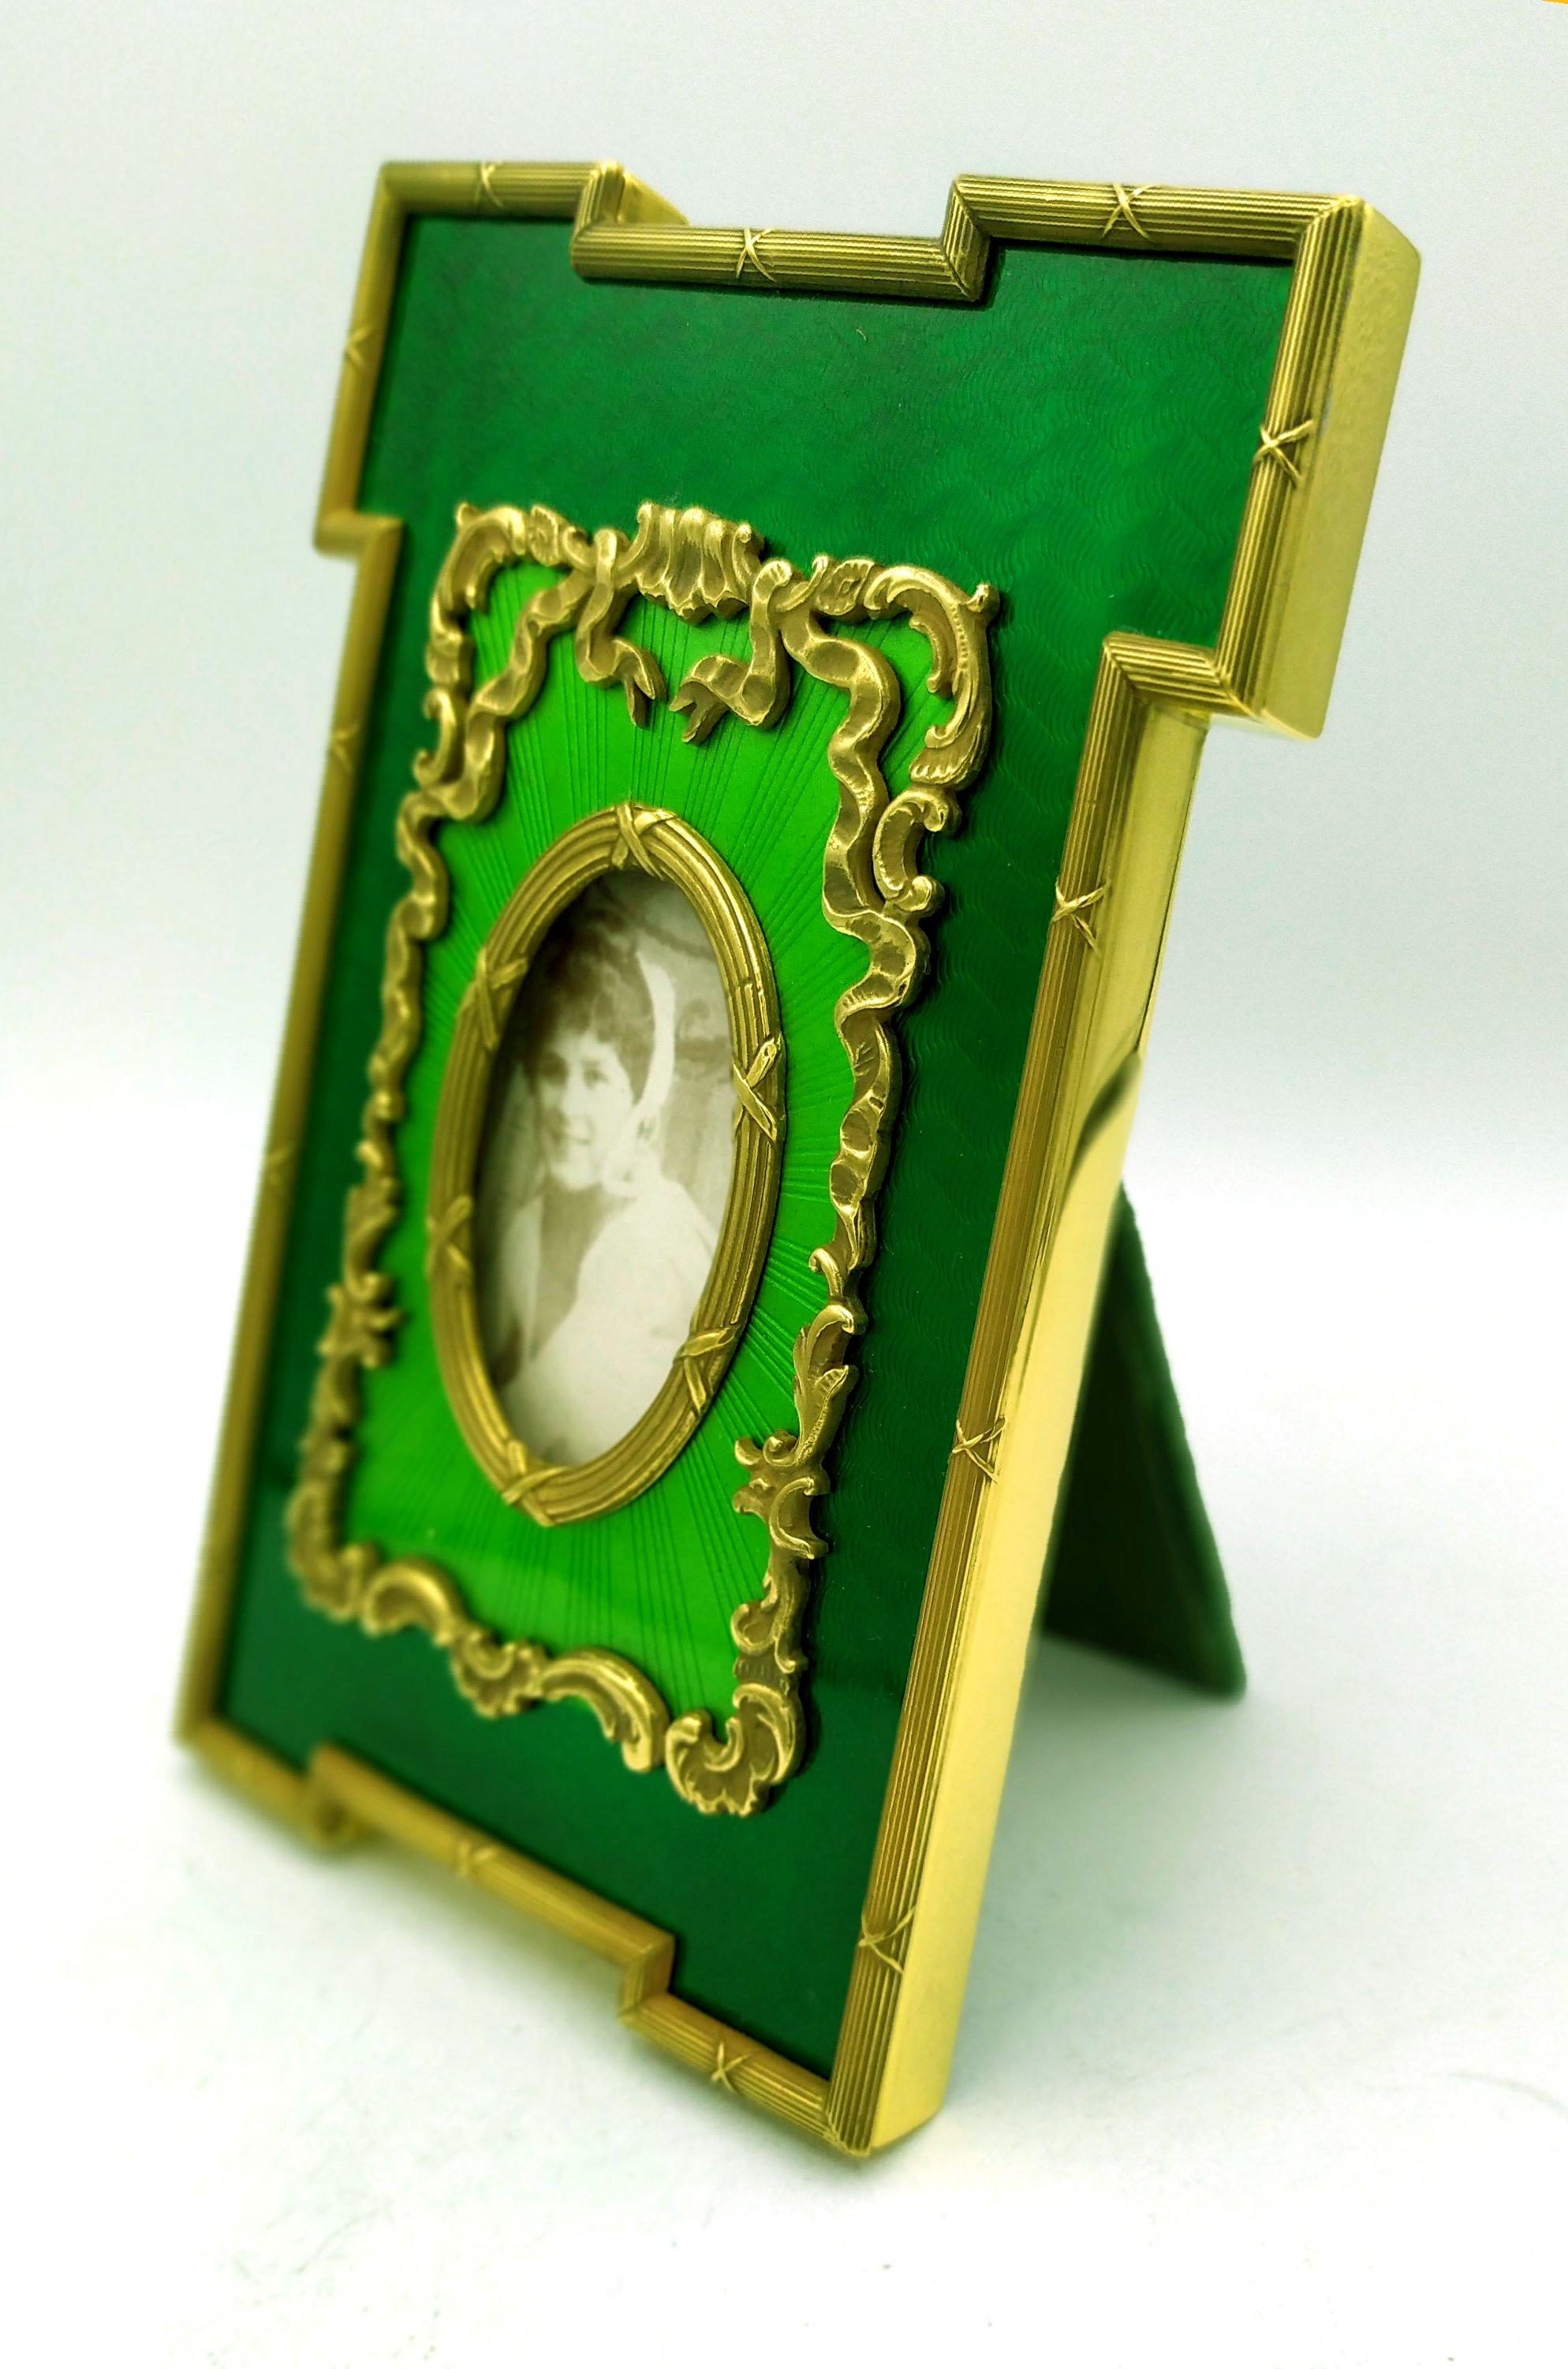 Napoleon III Picture Frame Green two-tones enamel Guilloche Sterling Silver Salimbeni For Sale